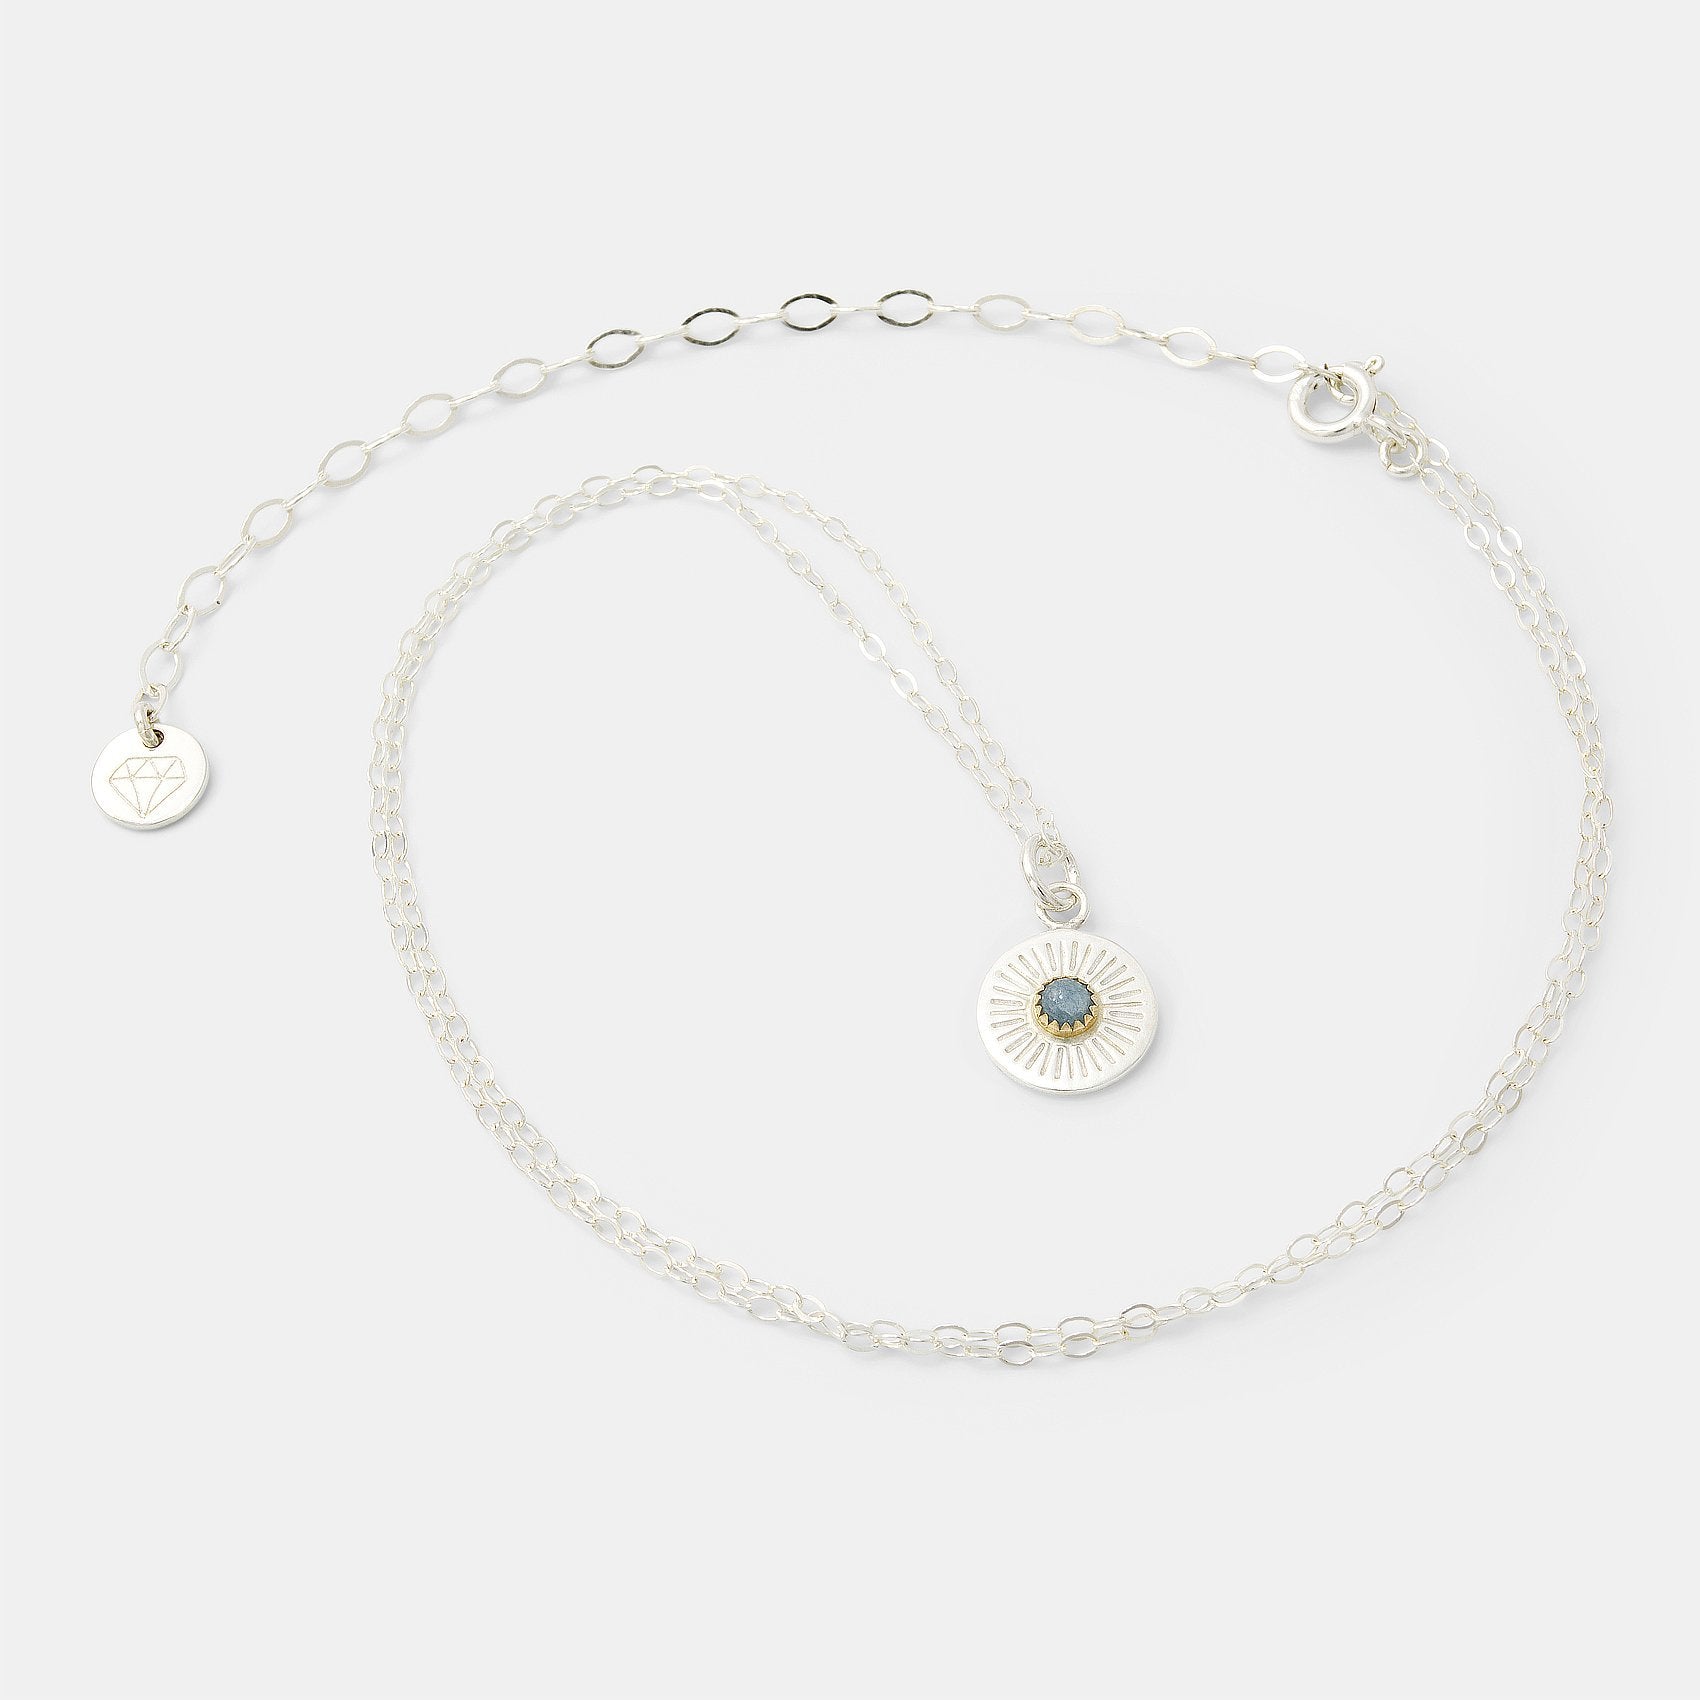 Birthstone pendant: aquamarine - Simone Walsh Jewellery Australia